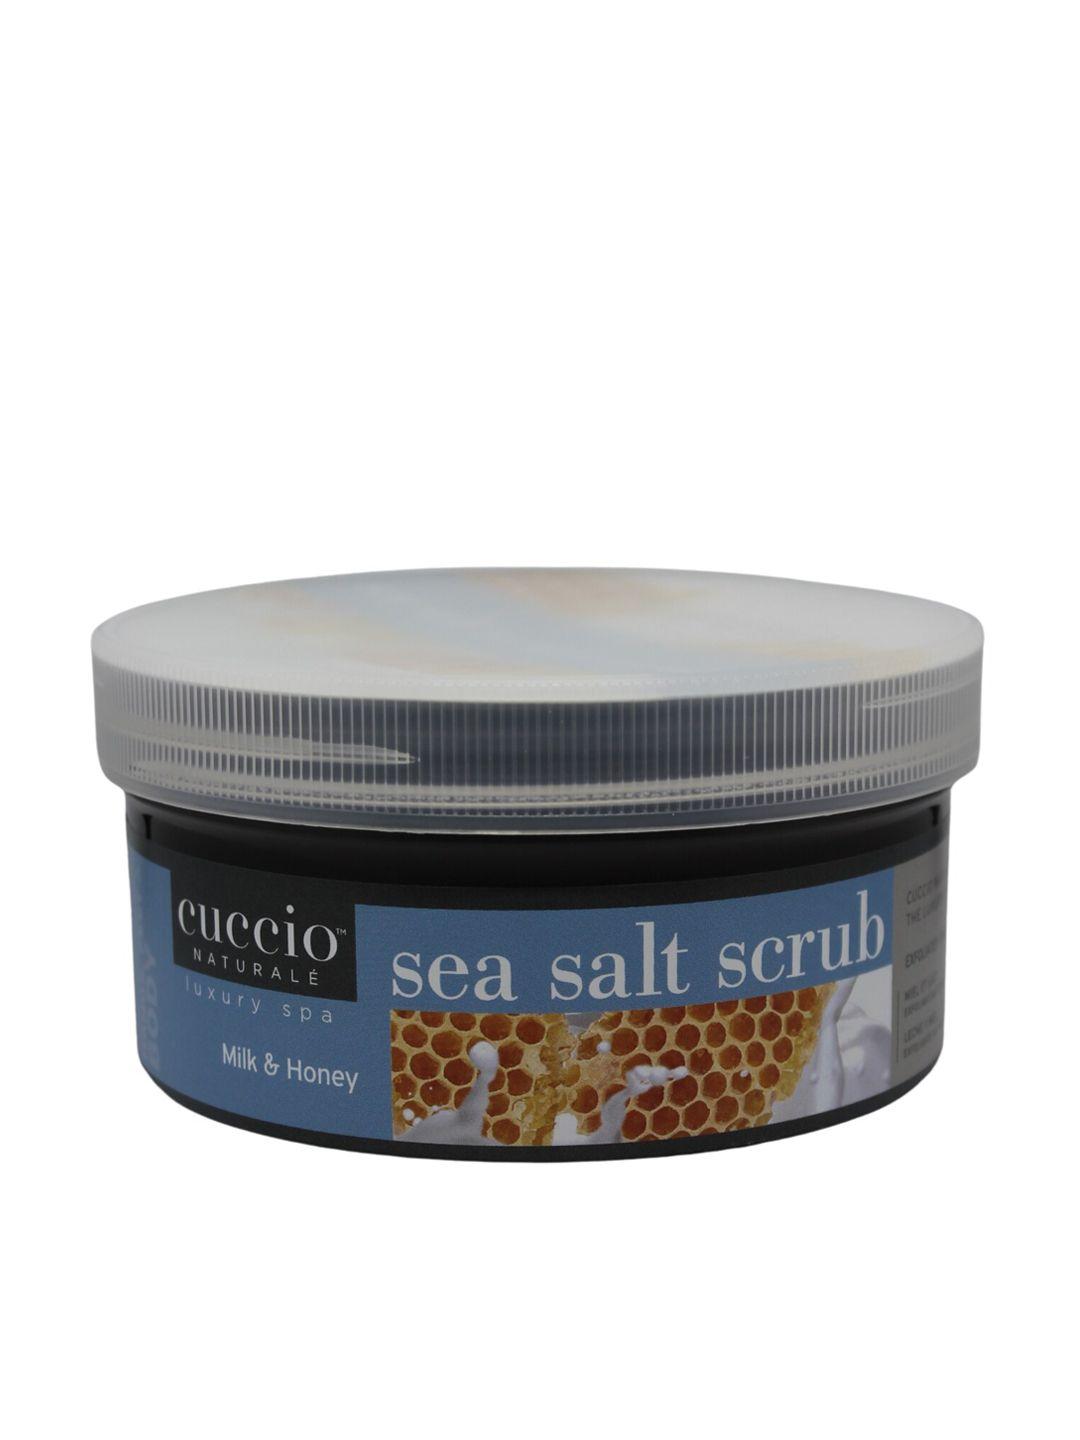 cuccio milk and honey sea salt scrub 553gm